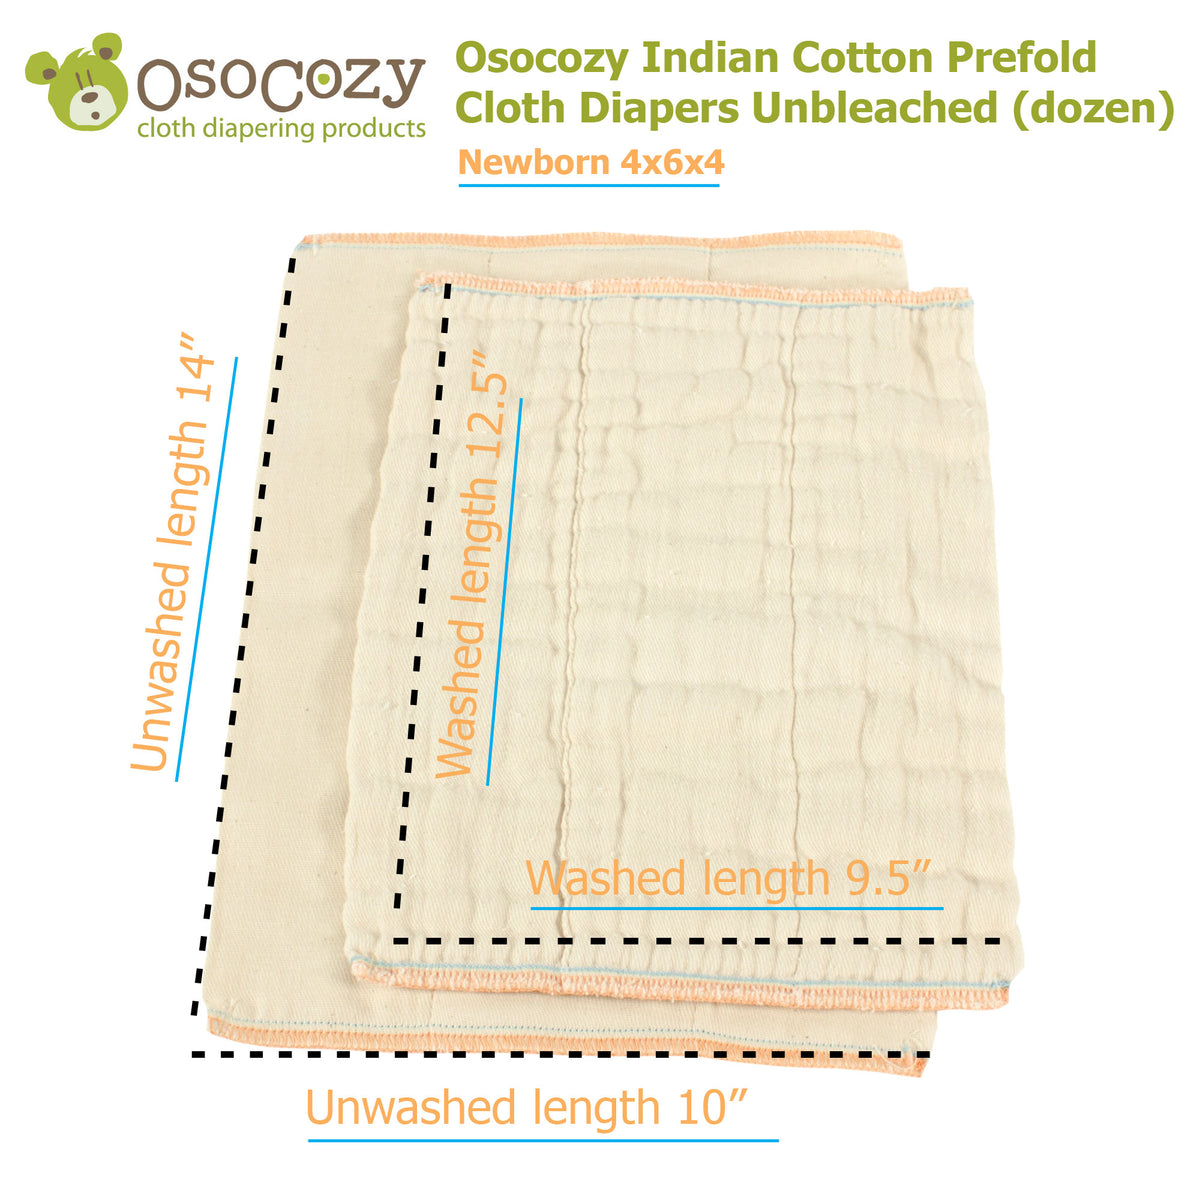 Osocozy Indian Cotton Prefold Cloth Diapers Unbleached (dozen) –